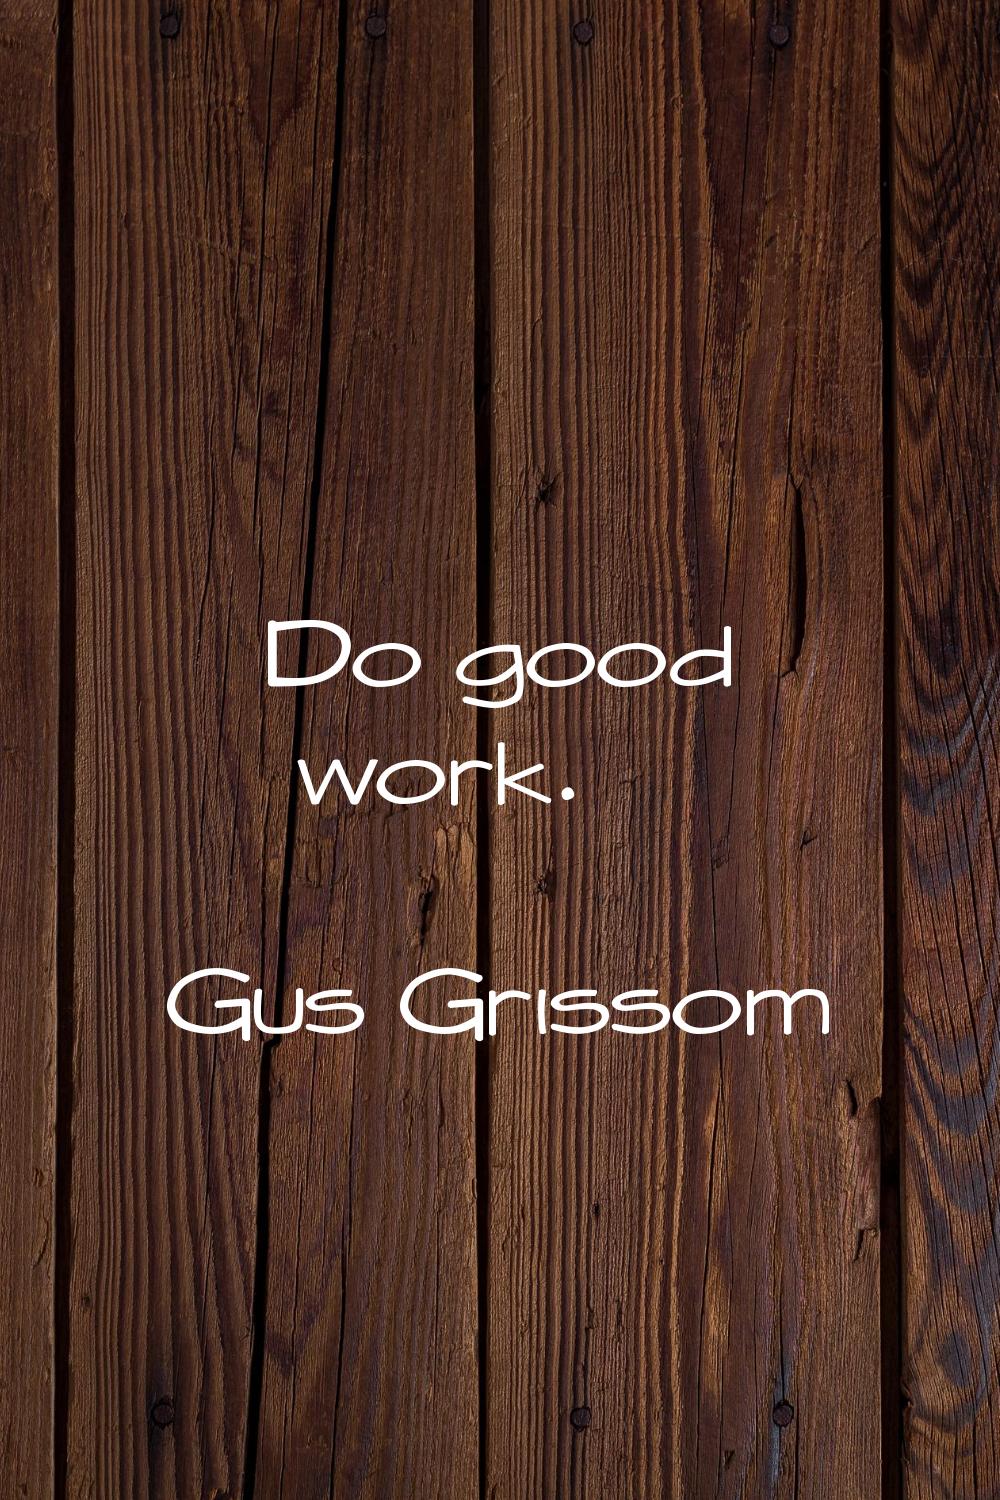 Do good work.